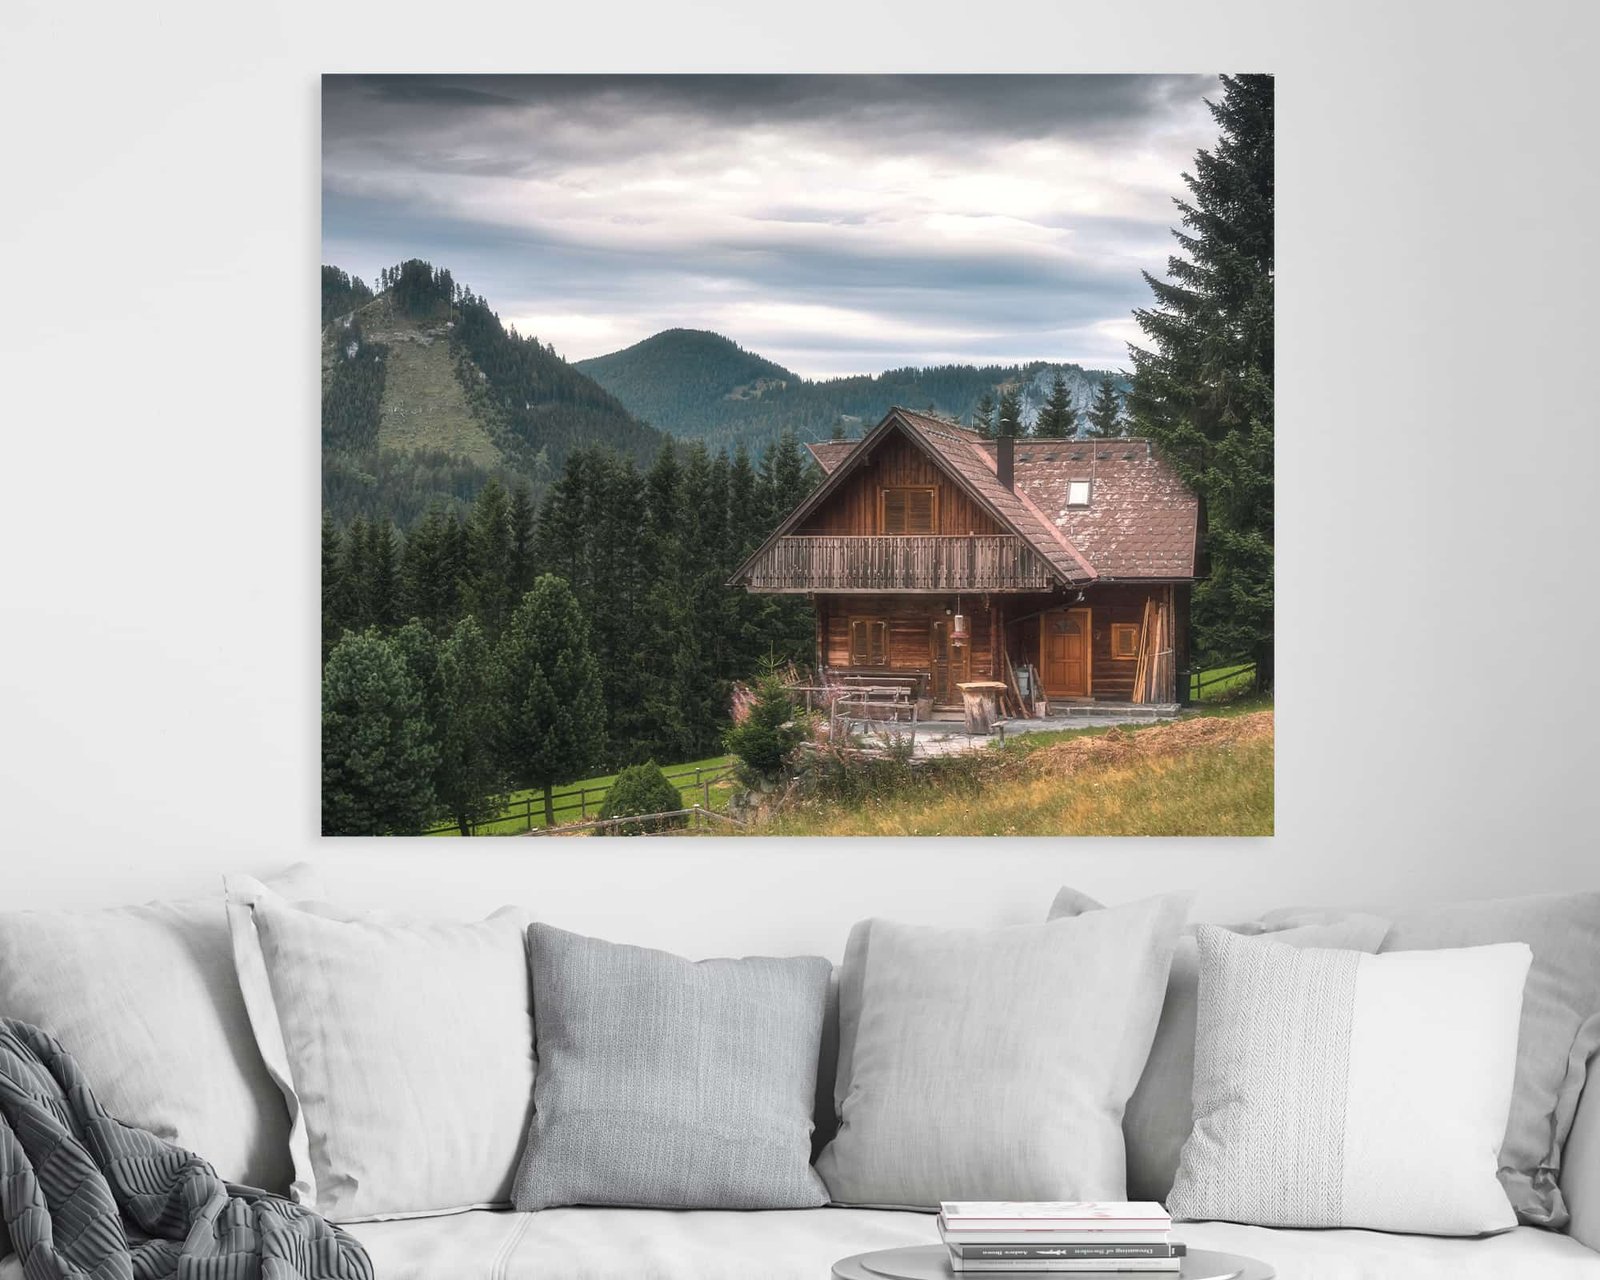 Wall art showing a wooden house facing a mountain